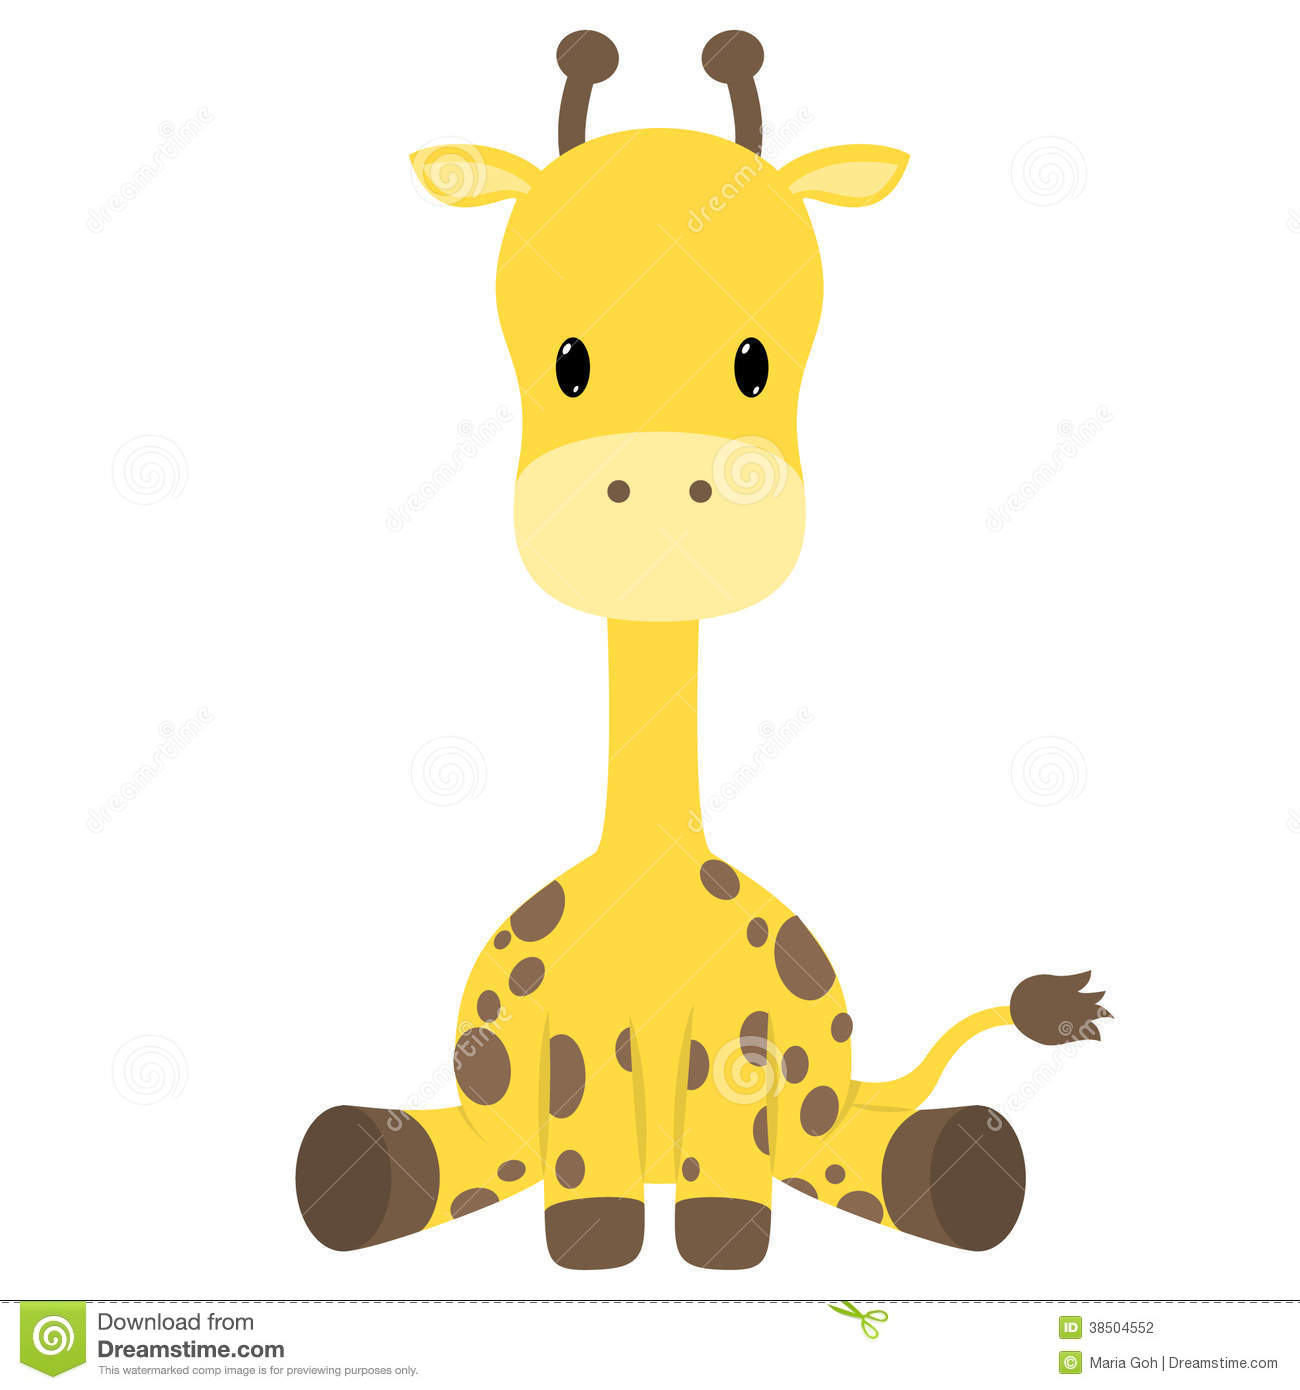 Baby giraffe clip art - .